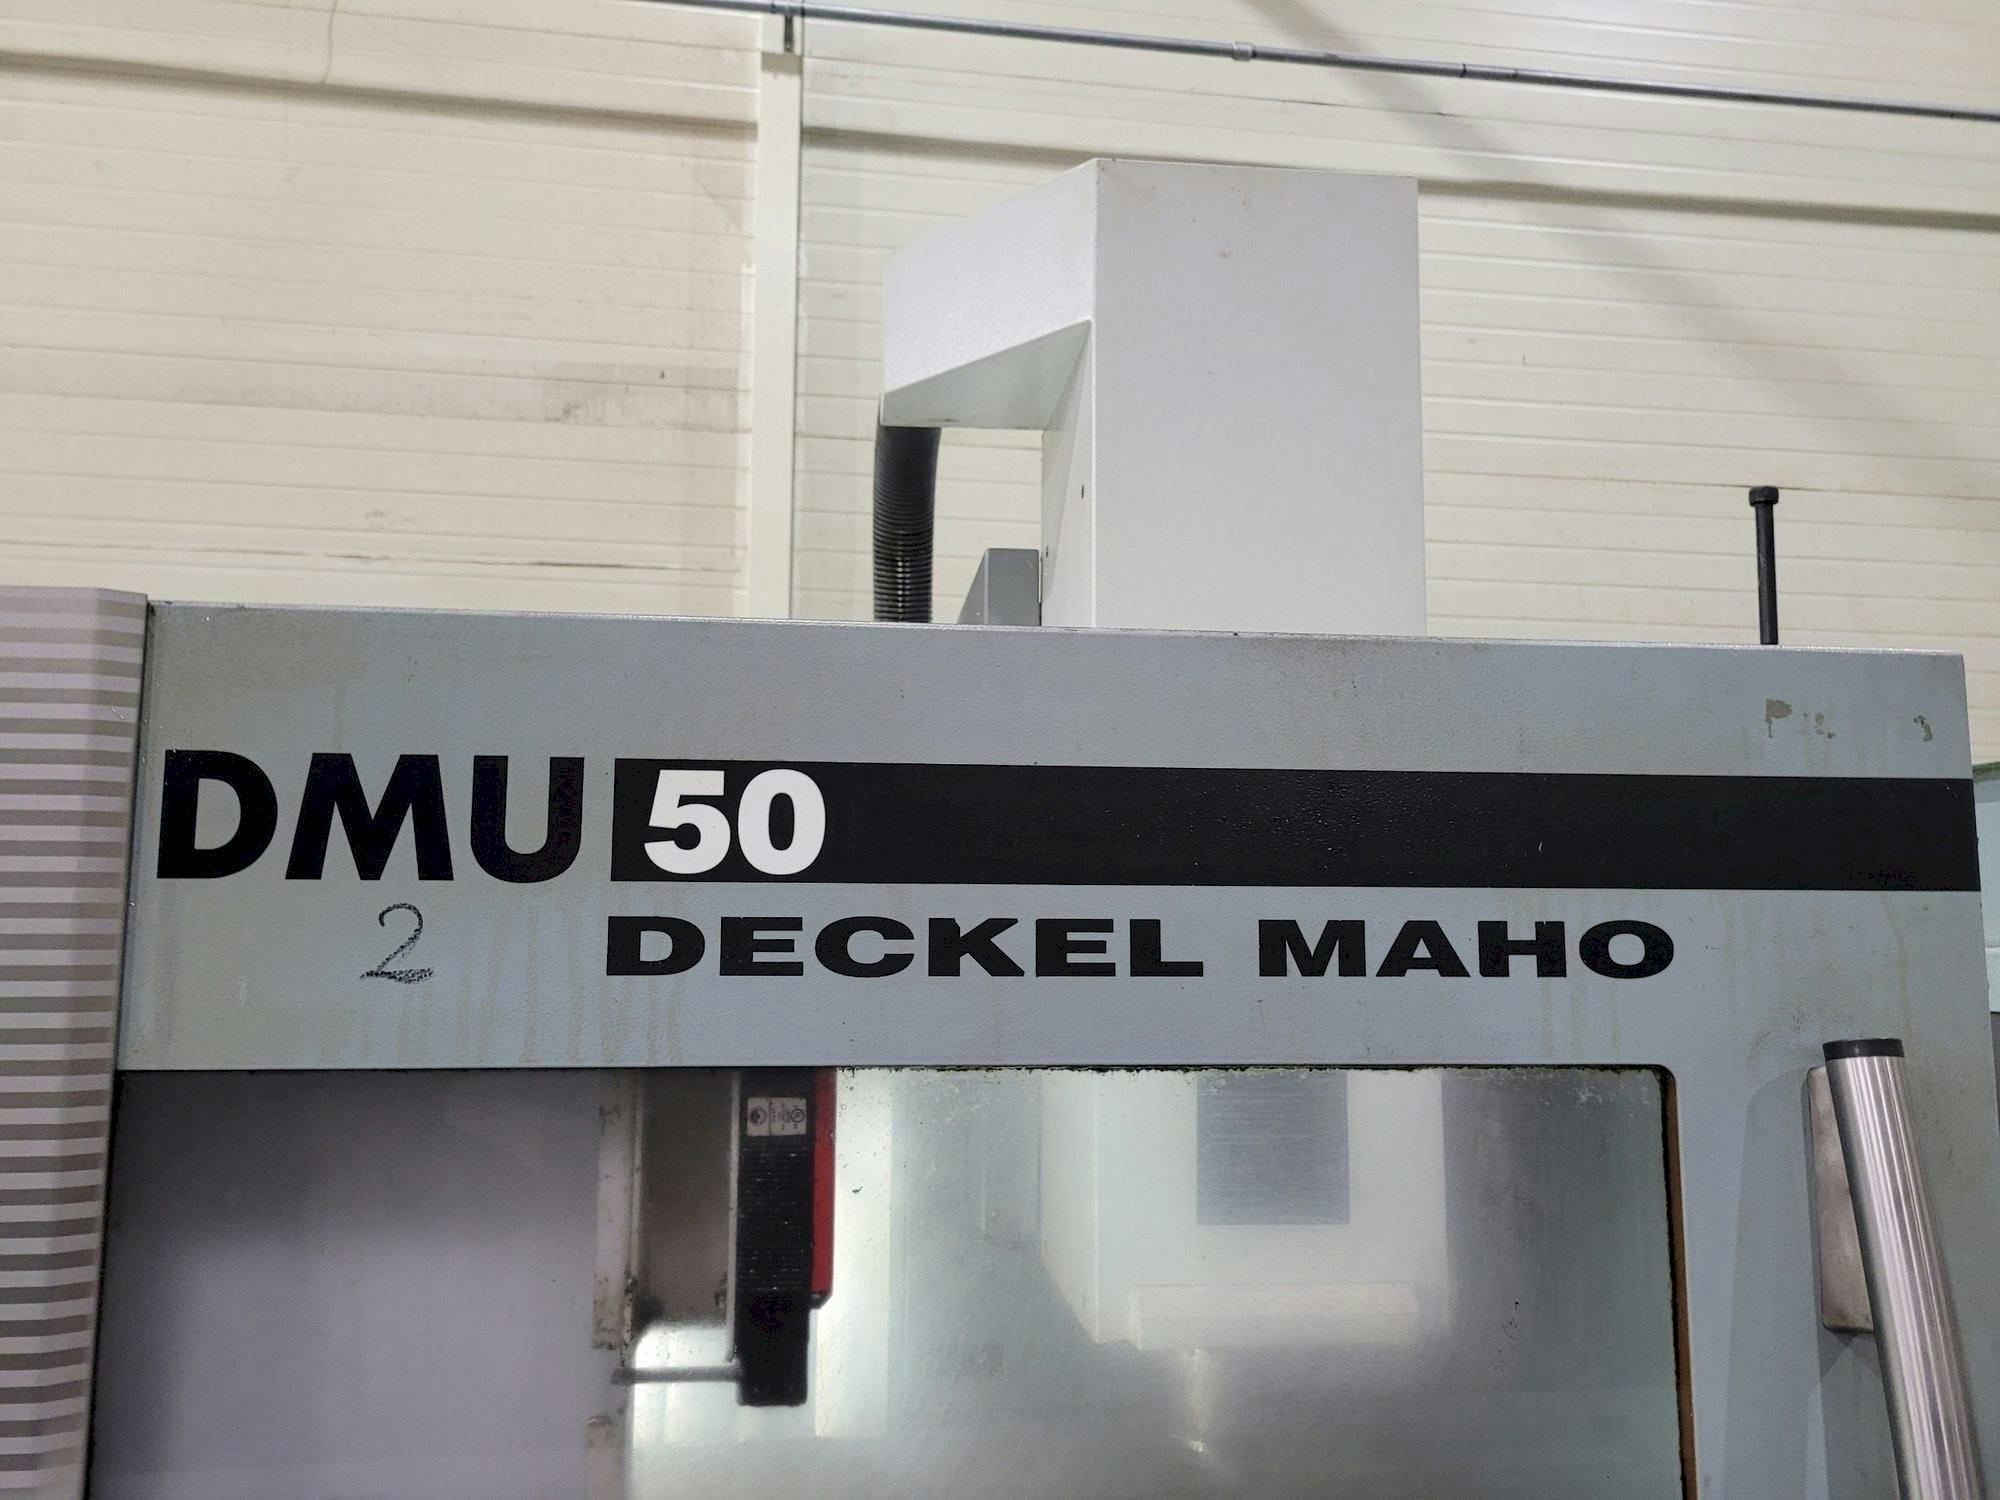 Front view of DECKEL MAHO DMU 50  machine